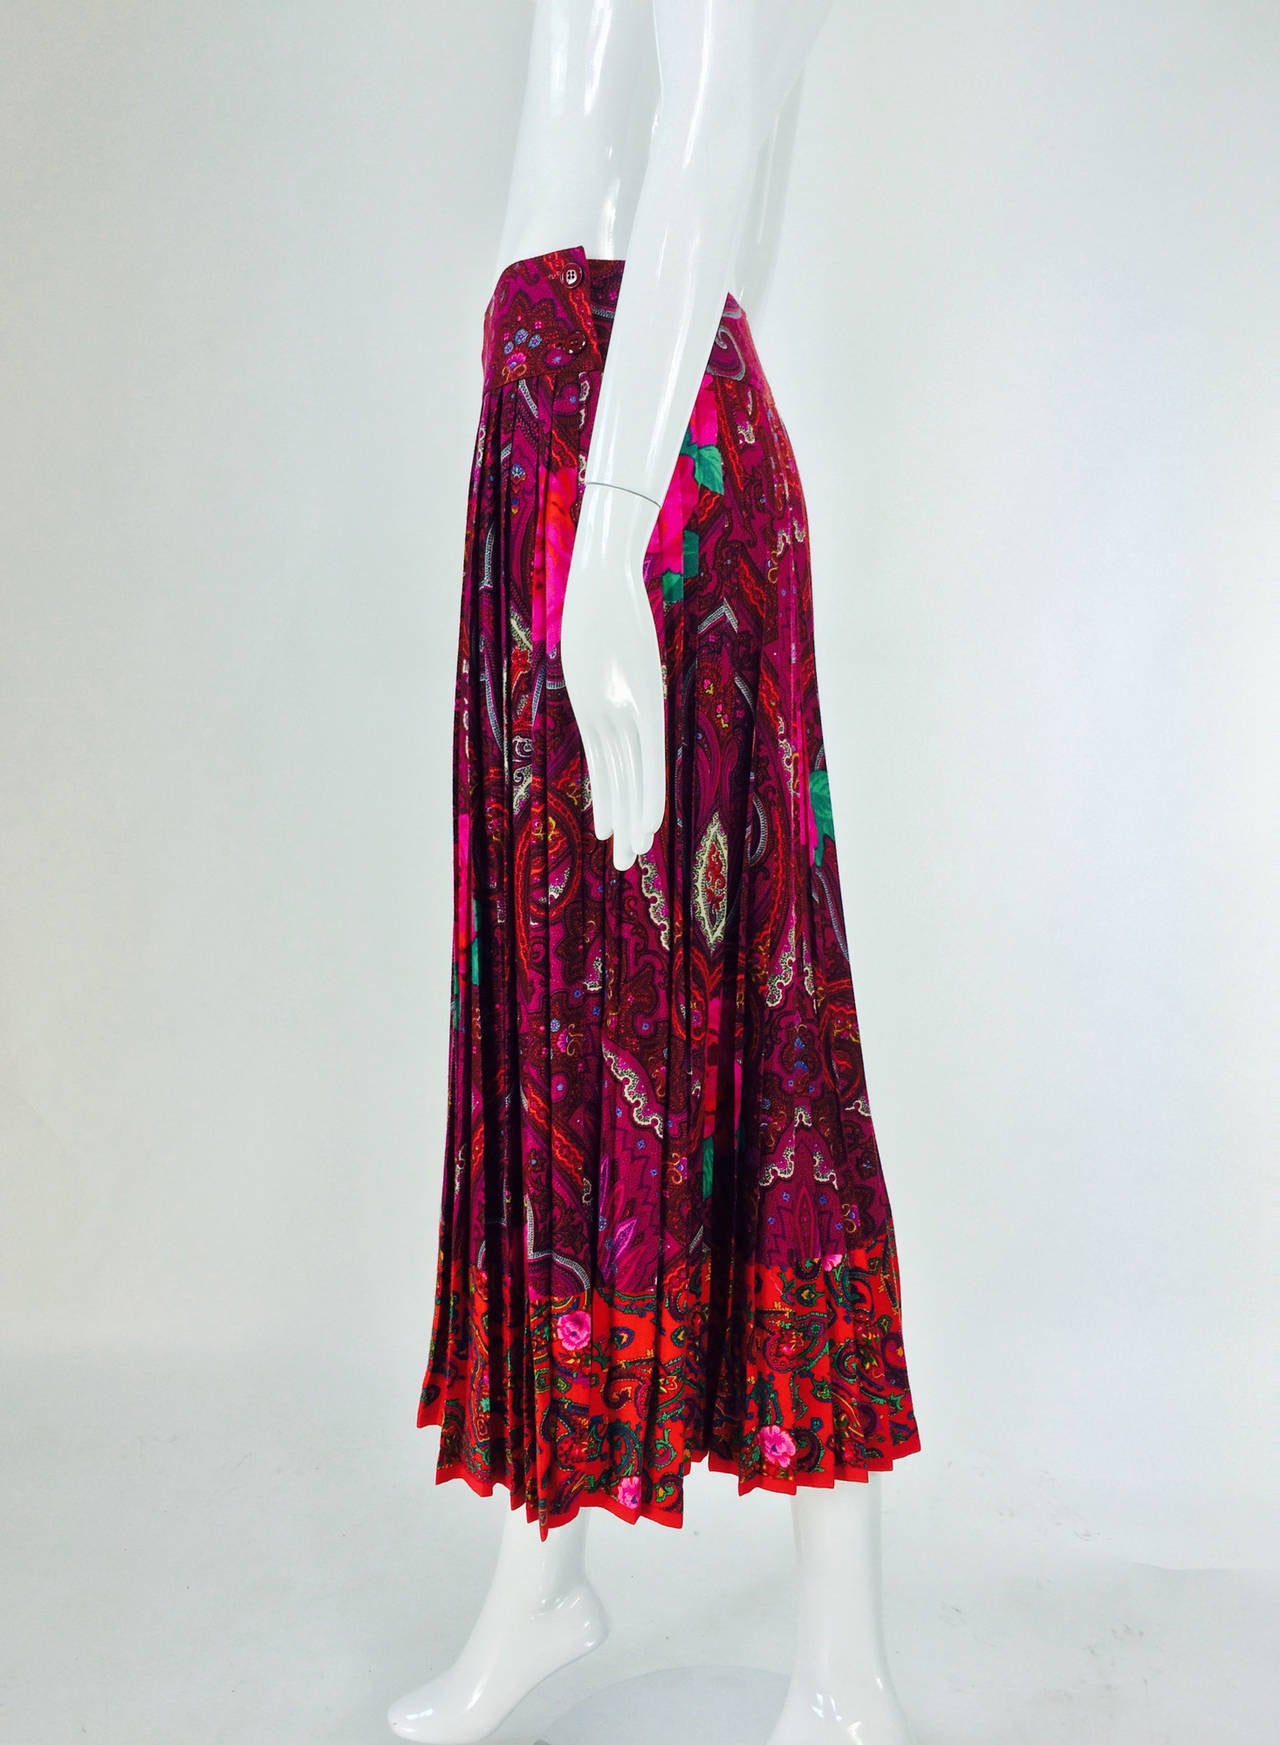 Women's Kenzo bright paisley mix print midi skirt 1980s